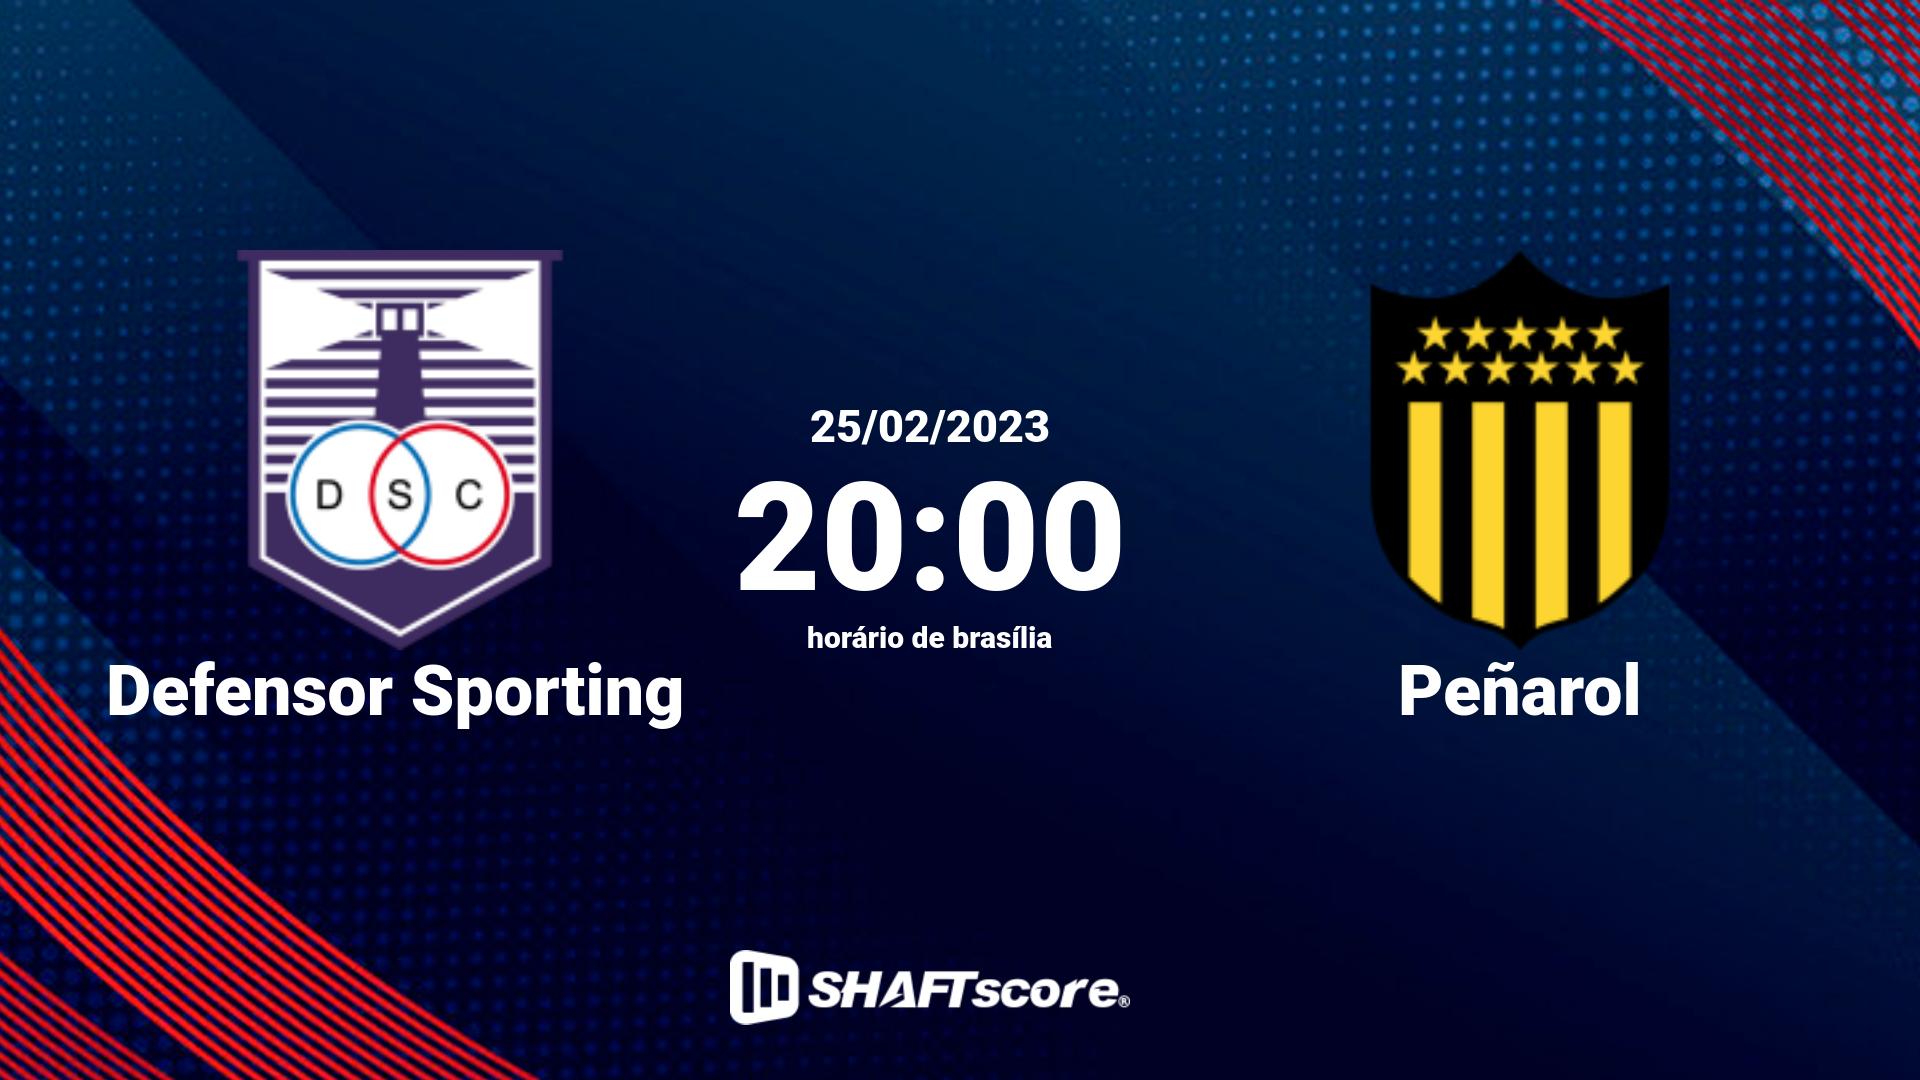 Estatísticas do jogo Defensor Sporting vs Peñarol 25.02 20:00